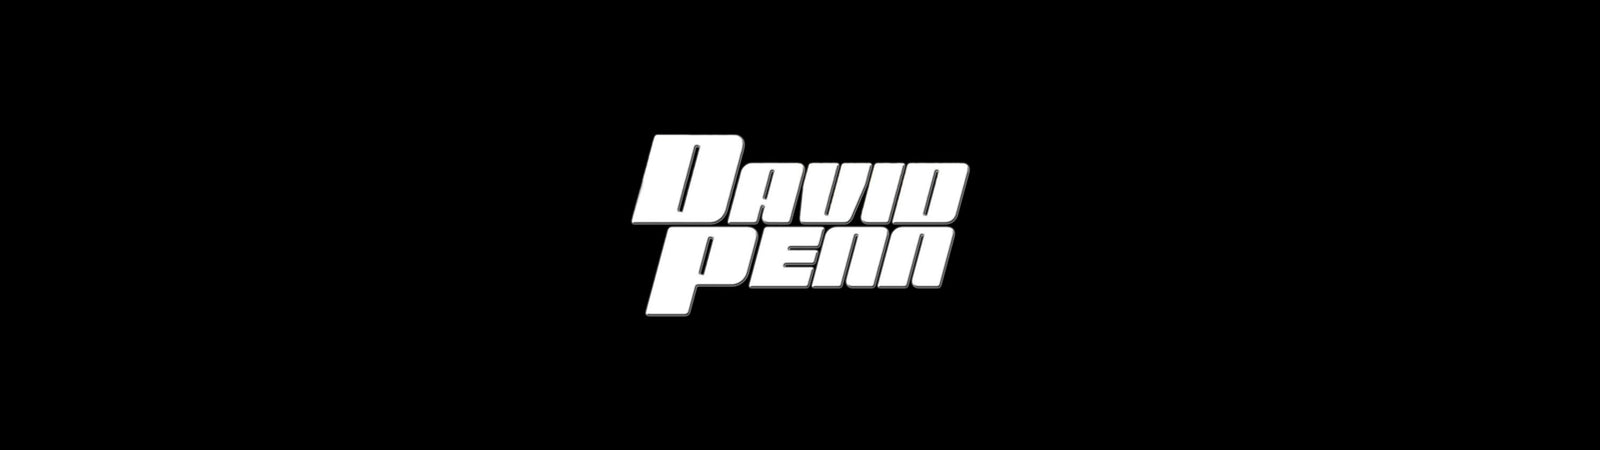 David Penn